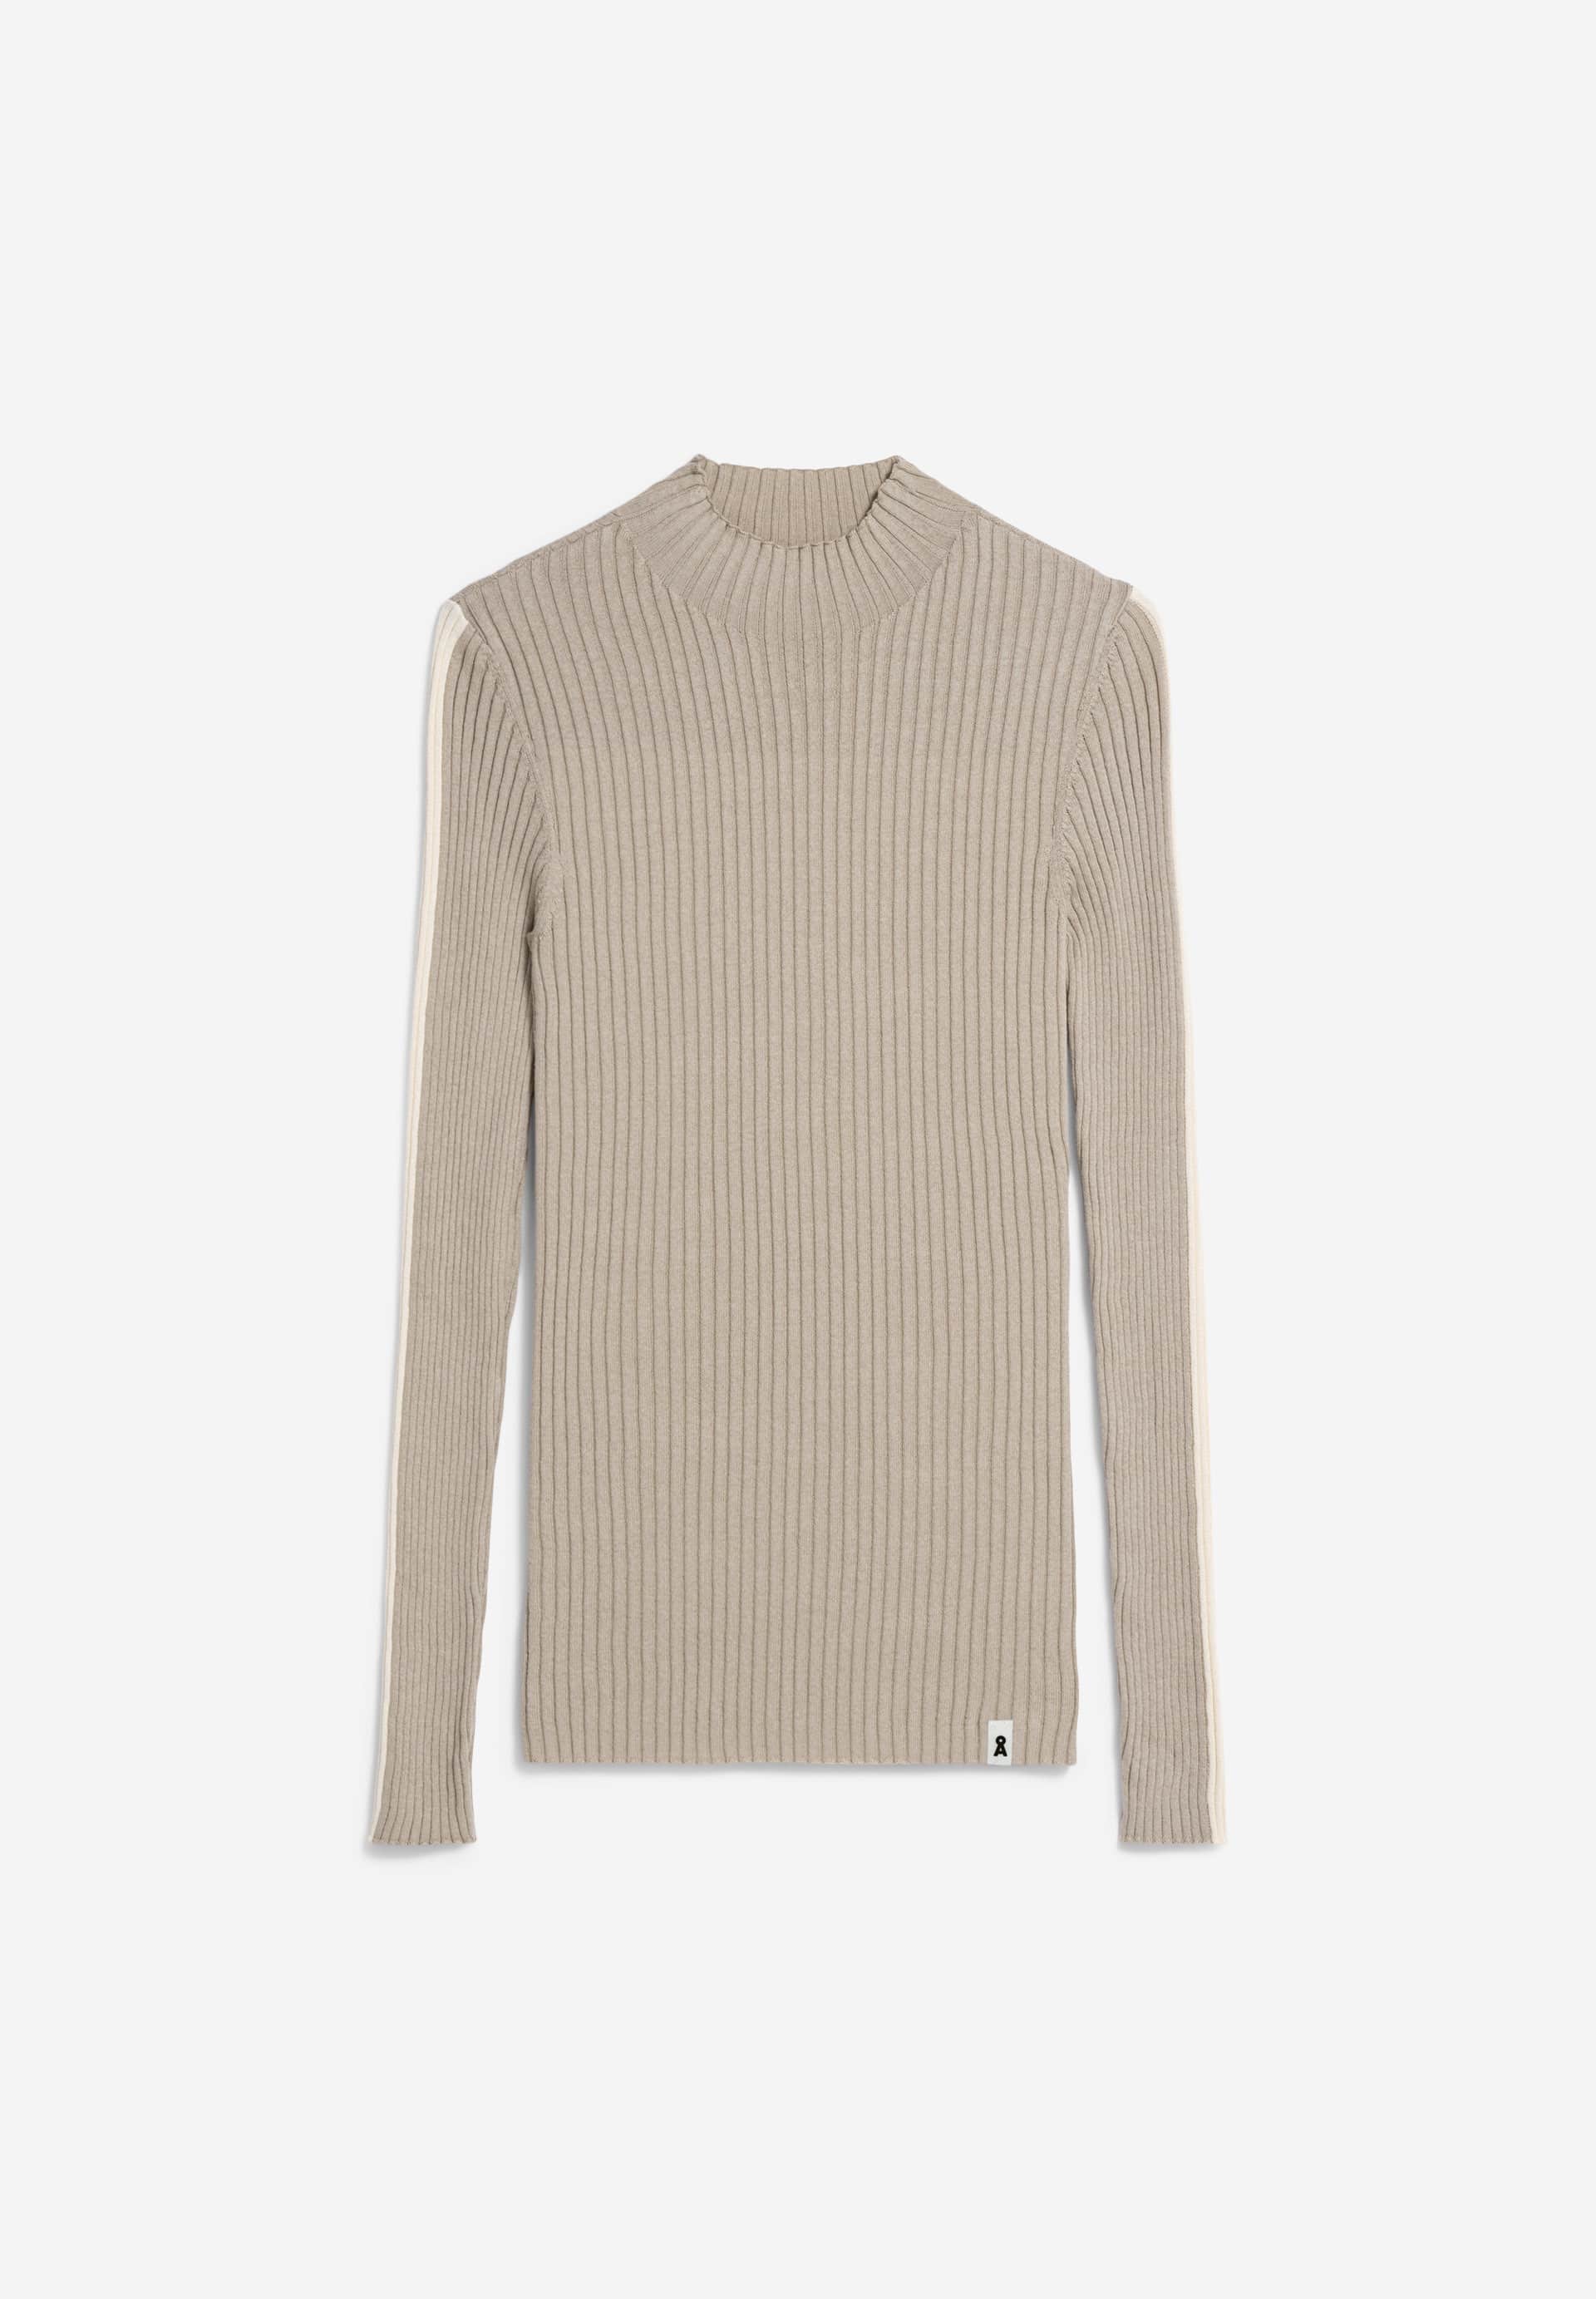 ALAANIA CLUB STRIPE Sweater Slim Fit made of Organic Cotton